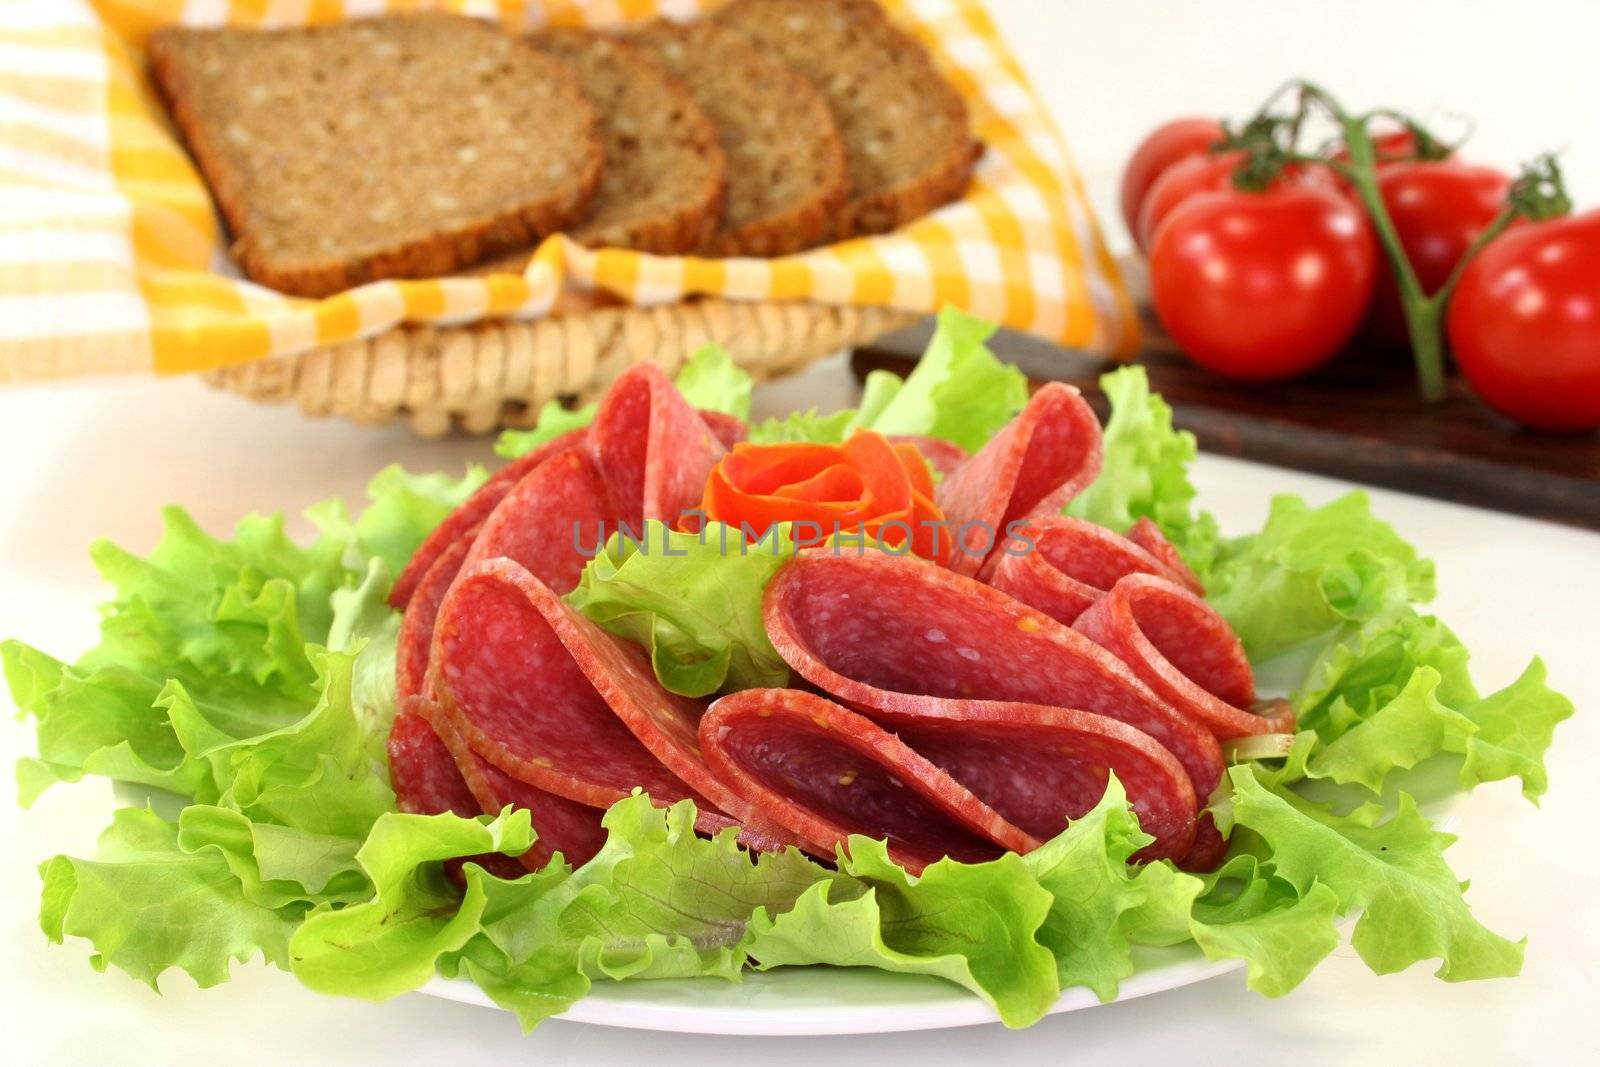 a plate of salami and garnish